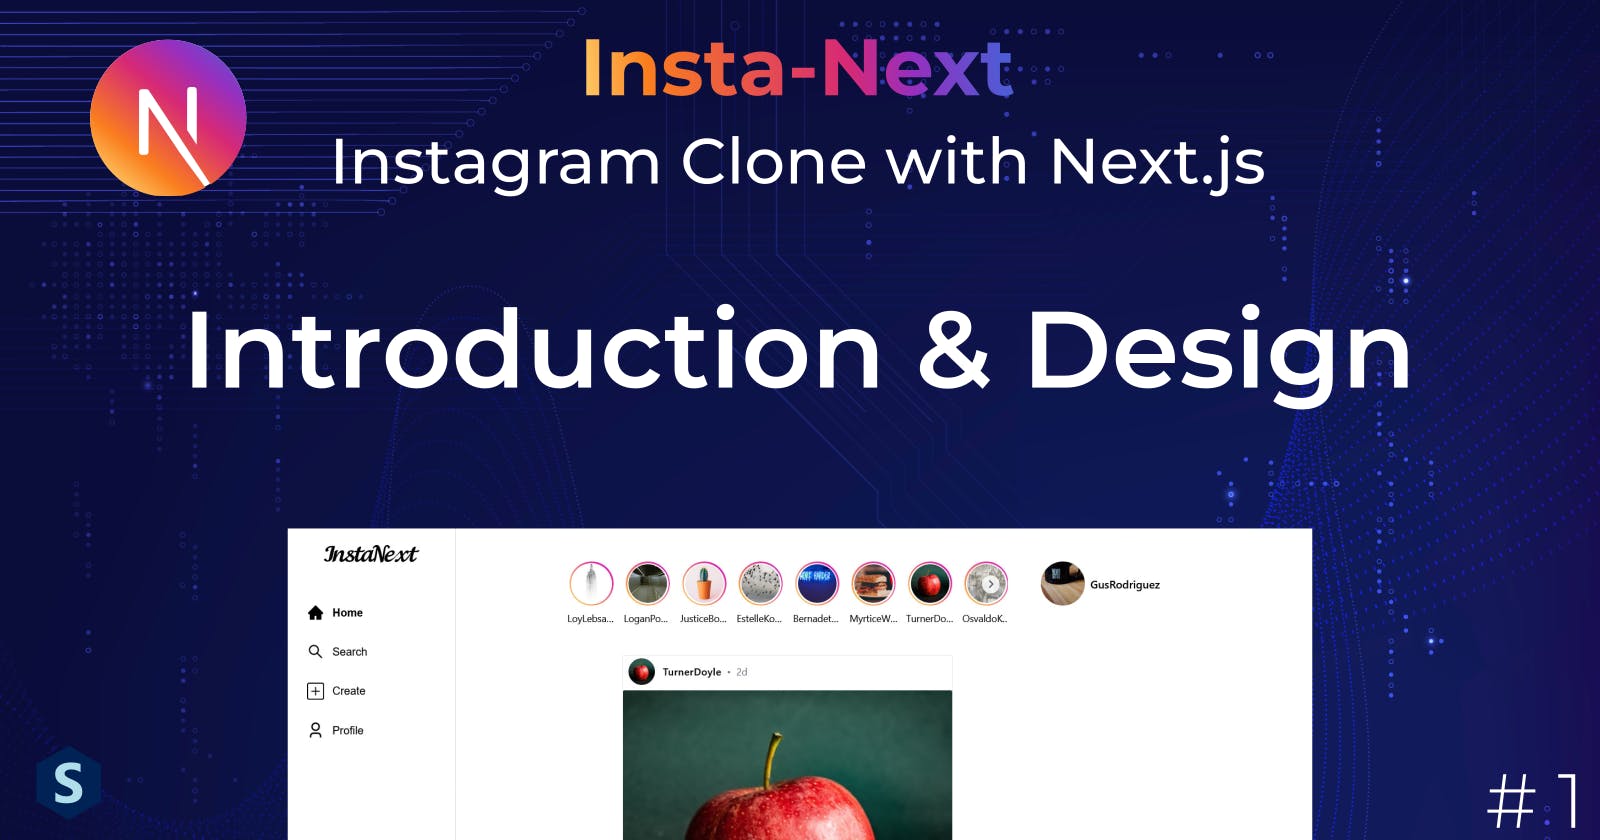 Insta-Next: Introduction & Designs